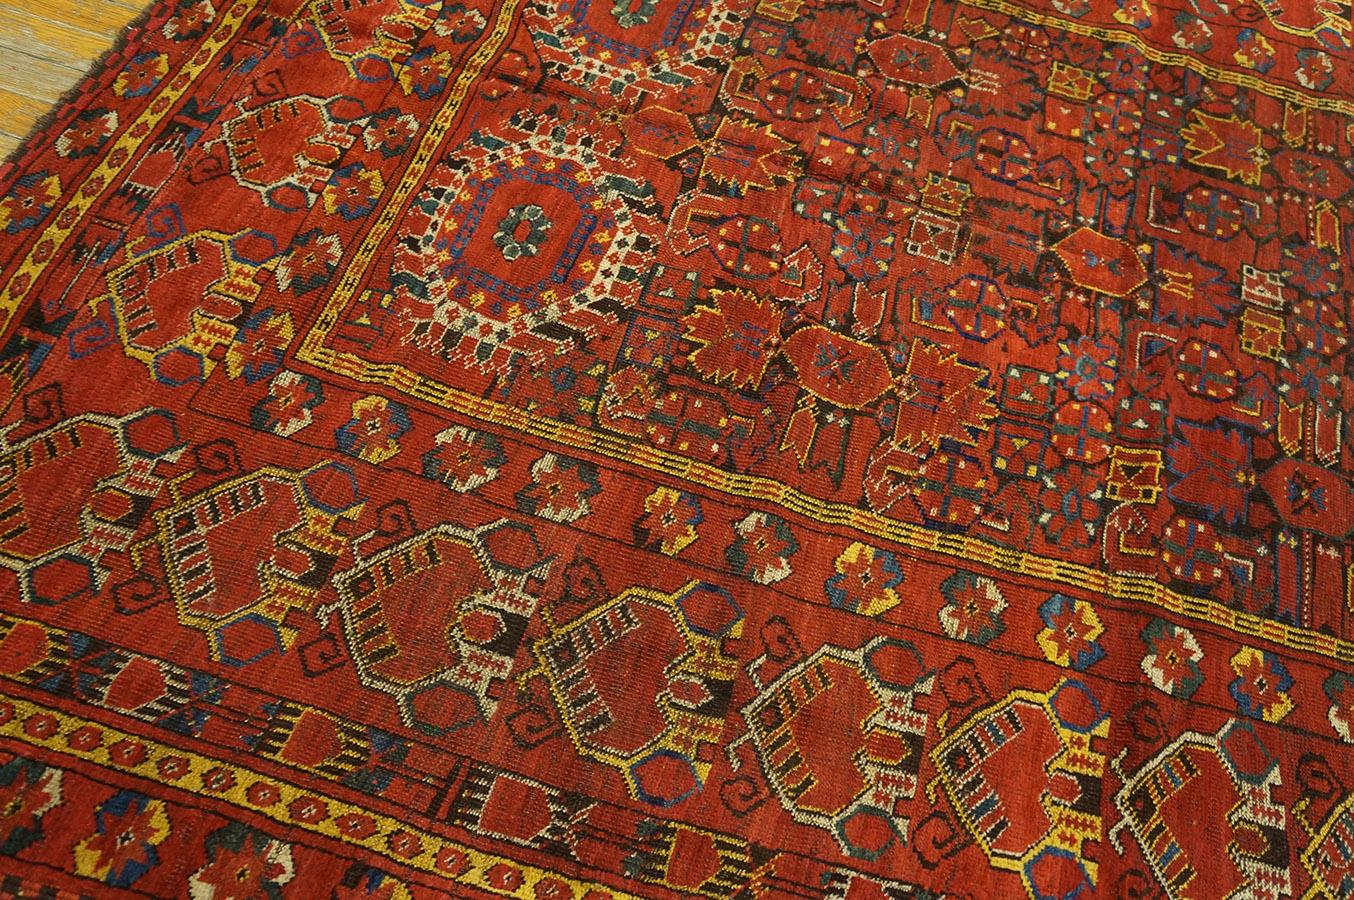 19th Century Central Asian Ersari-Beshir Gallery Carpet (6'6